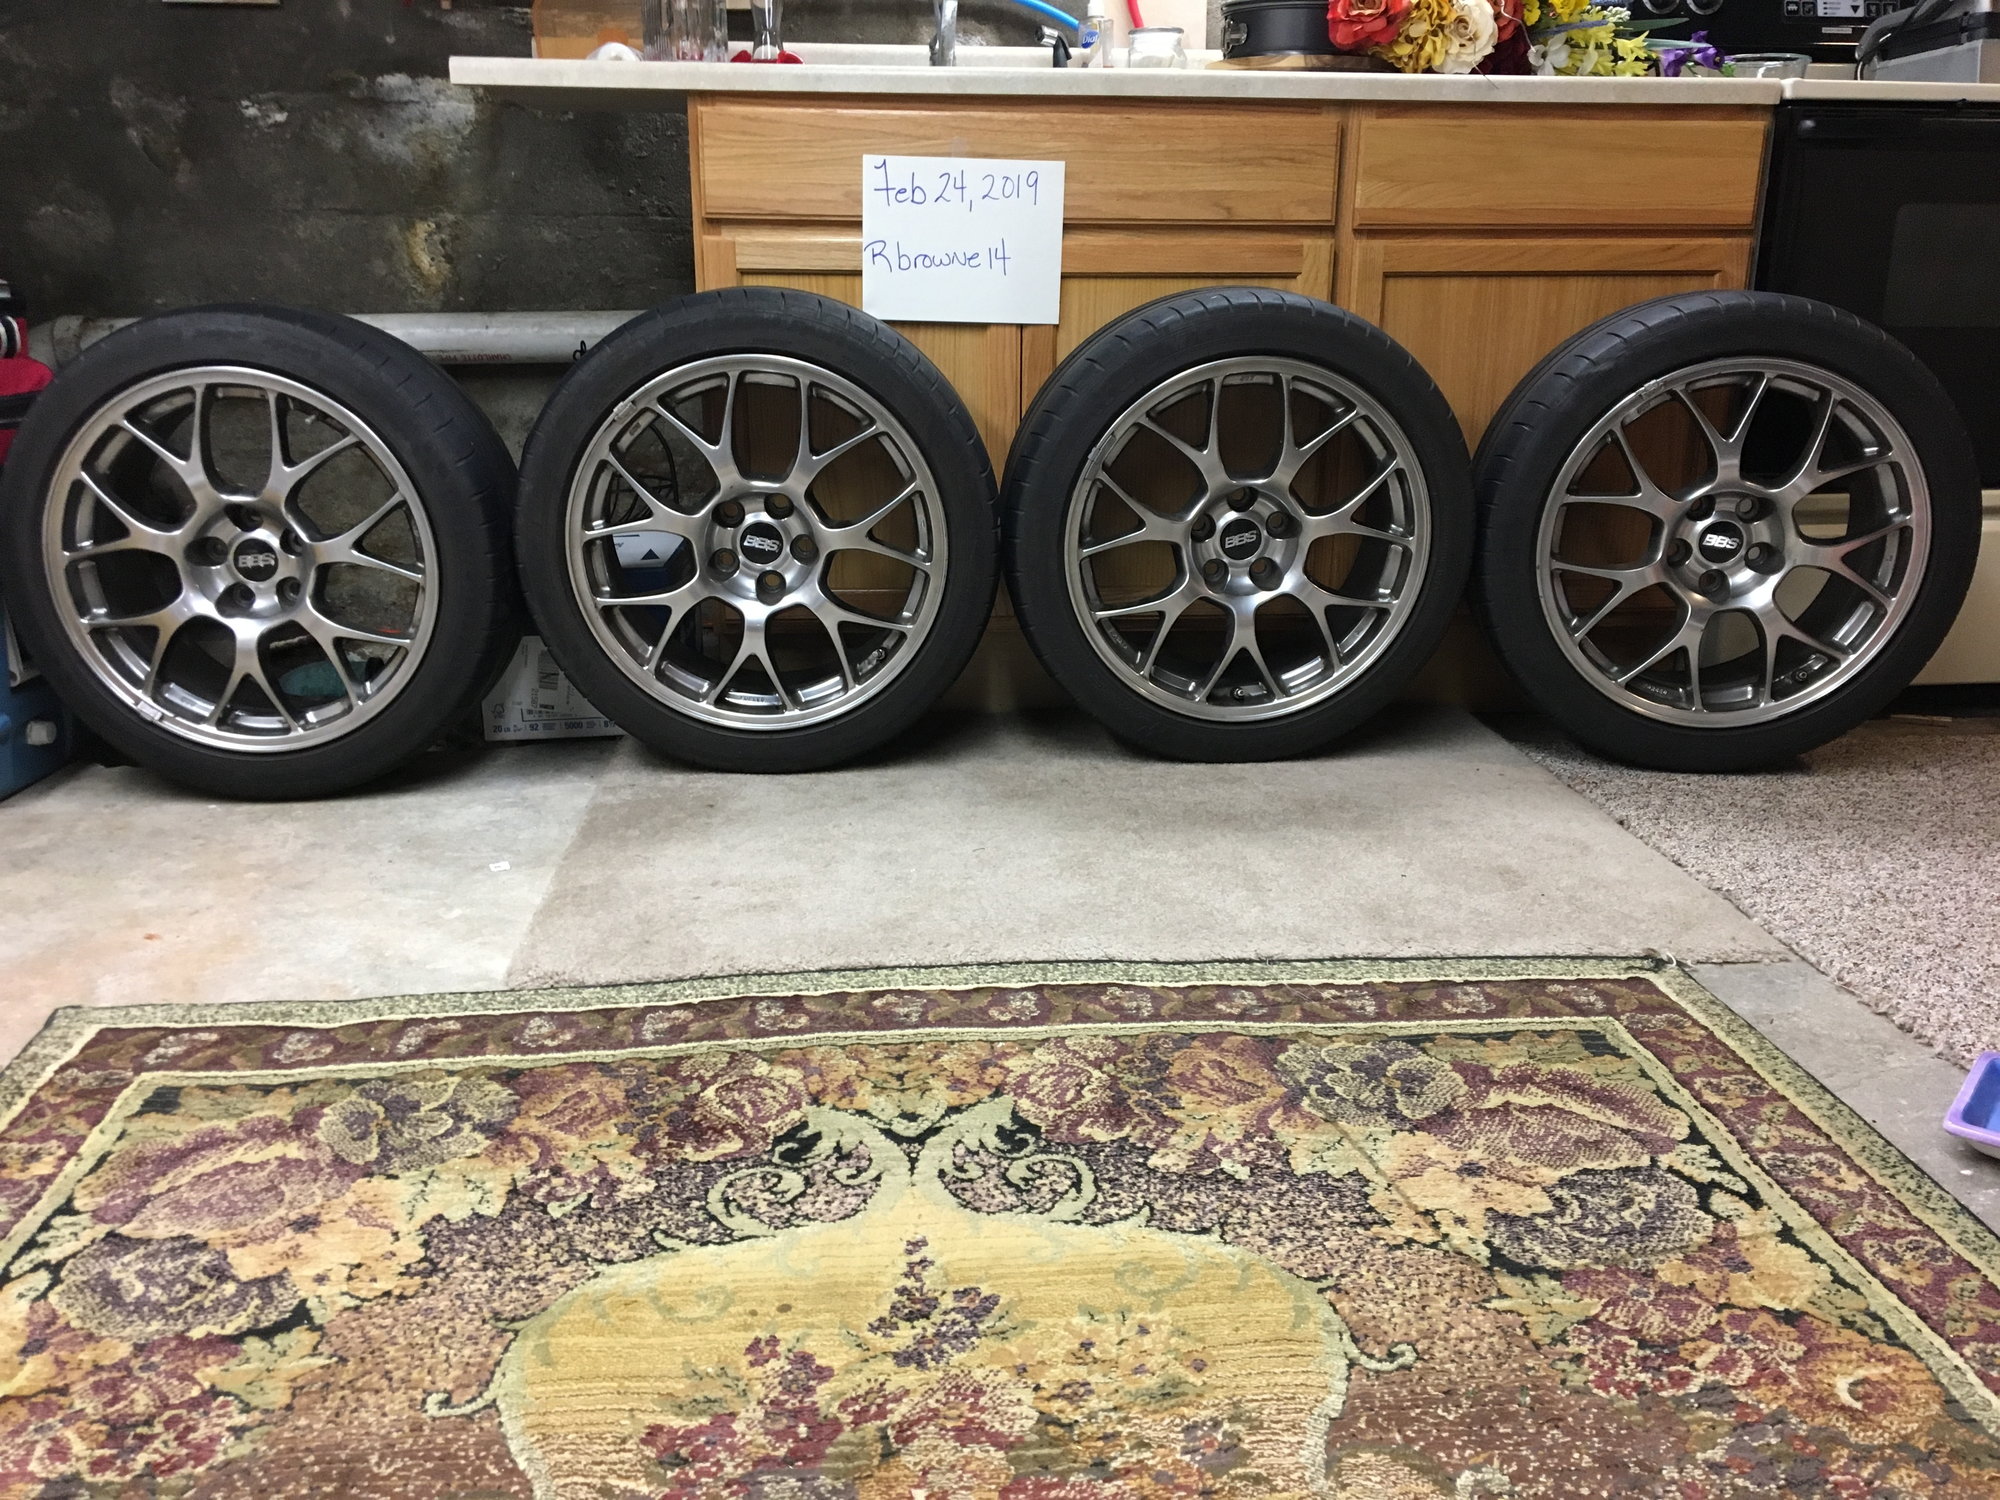 Wheels and Tires/Axles - 2012 Stock Evo X MR BBS Wheels w/ 245/40-18 Michelin PSS Tires - Used - 2008 to 2015 Mitsubishi Lancer Evolution - Rutland, VT 05701, United States